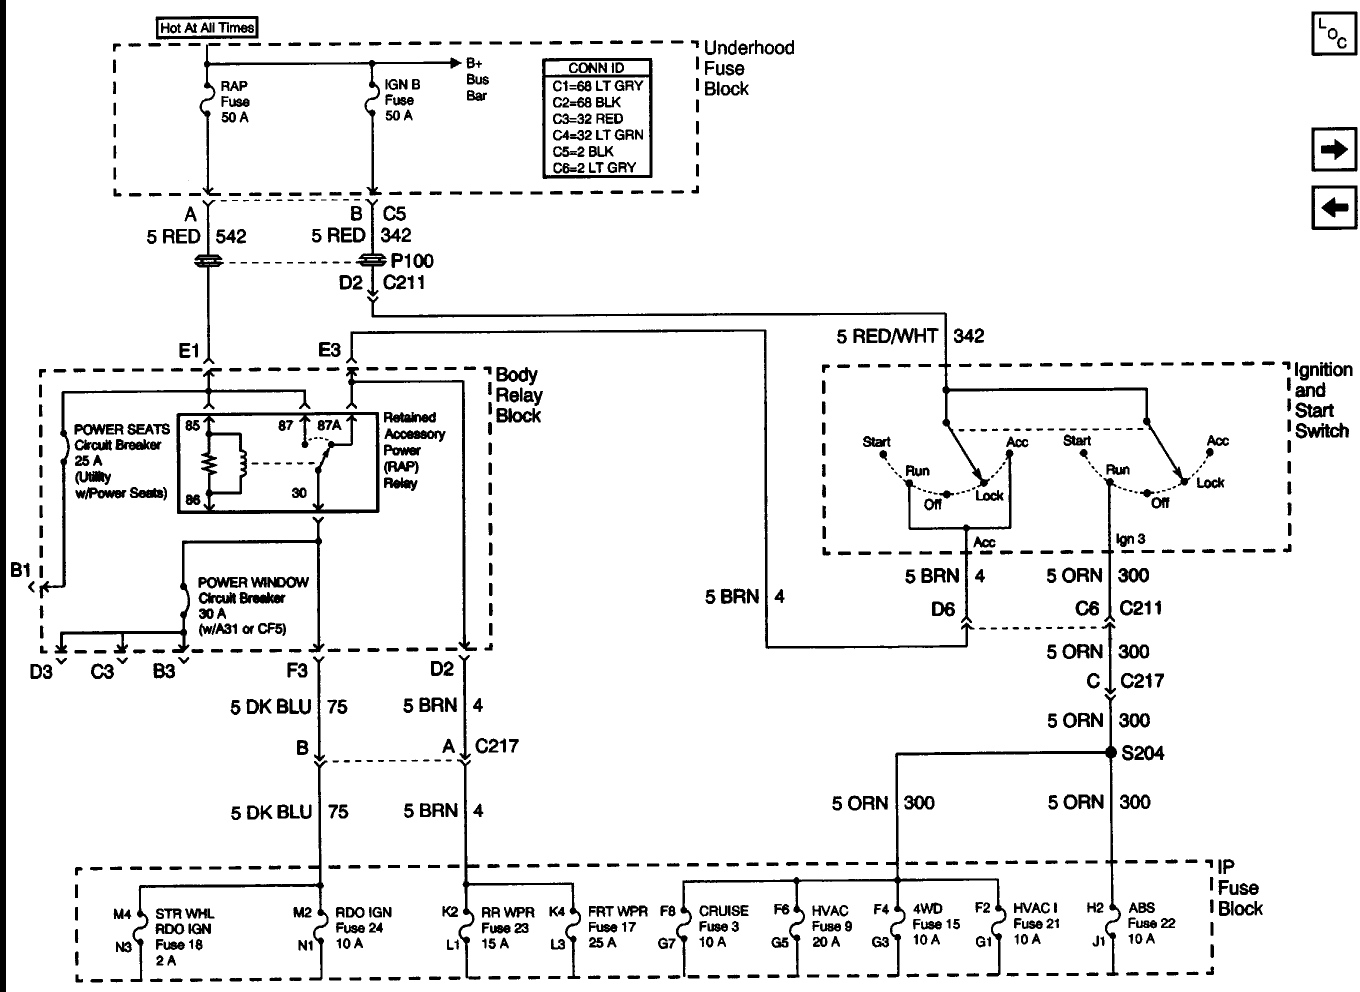 Anatomy of the Ignition Switch - Blazer Forum - Chevy Blazer Forums  1997 Chevy Tahoe Ignition Switch Wireing Diagram Color Code    Blazer Forum